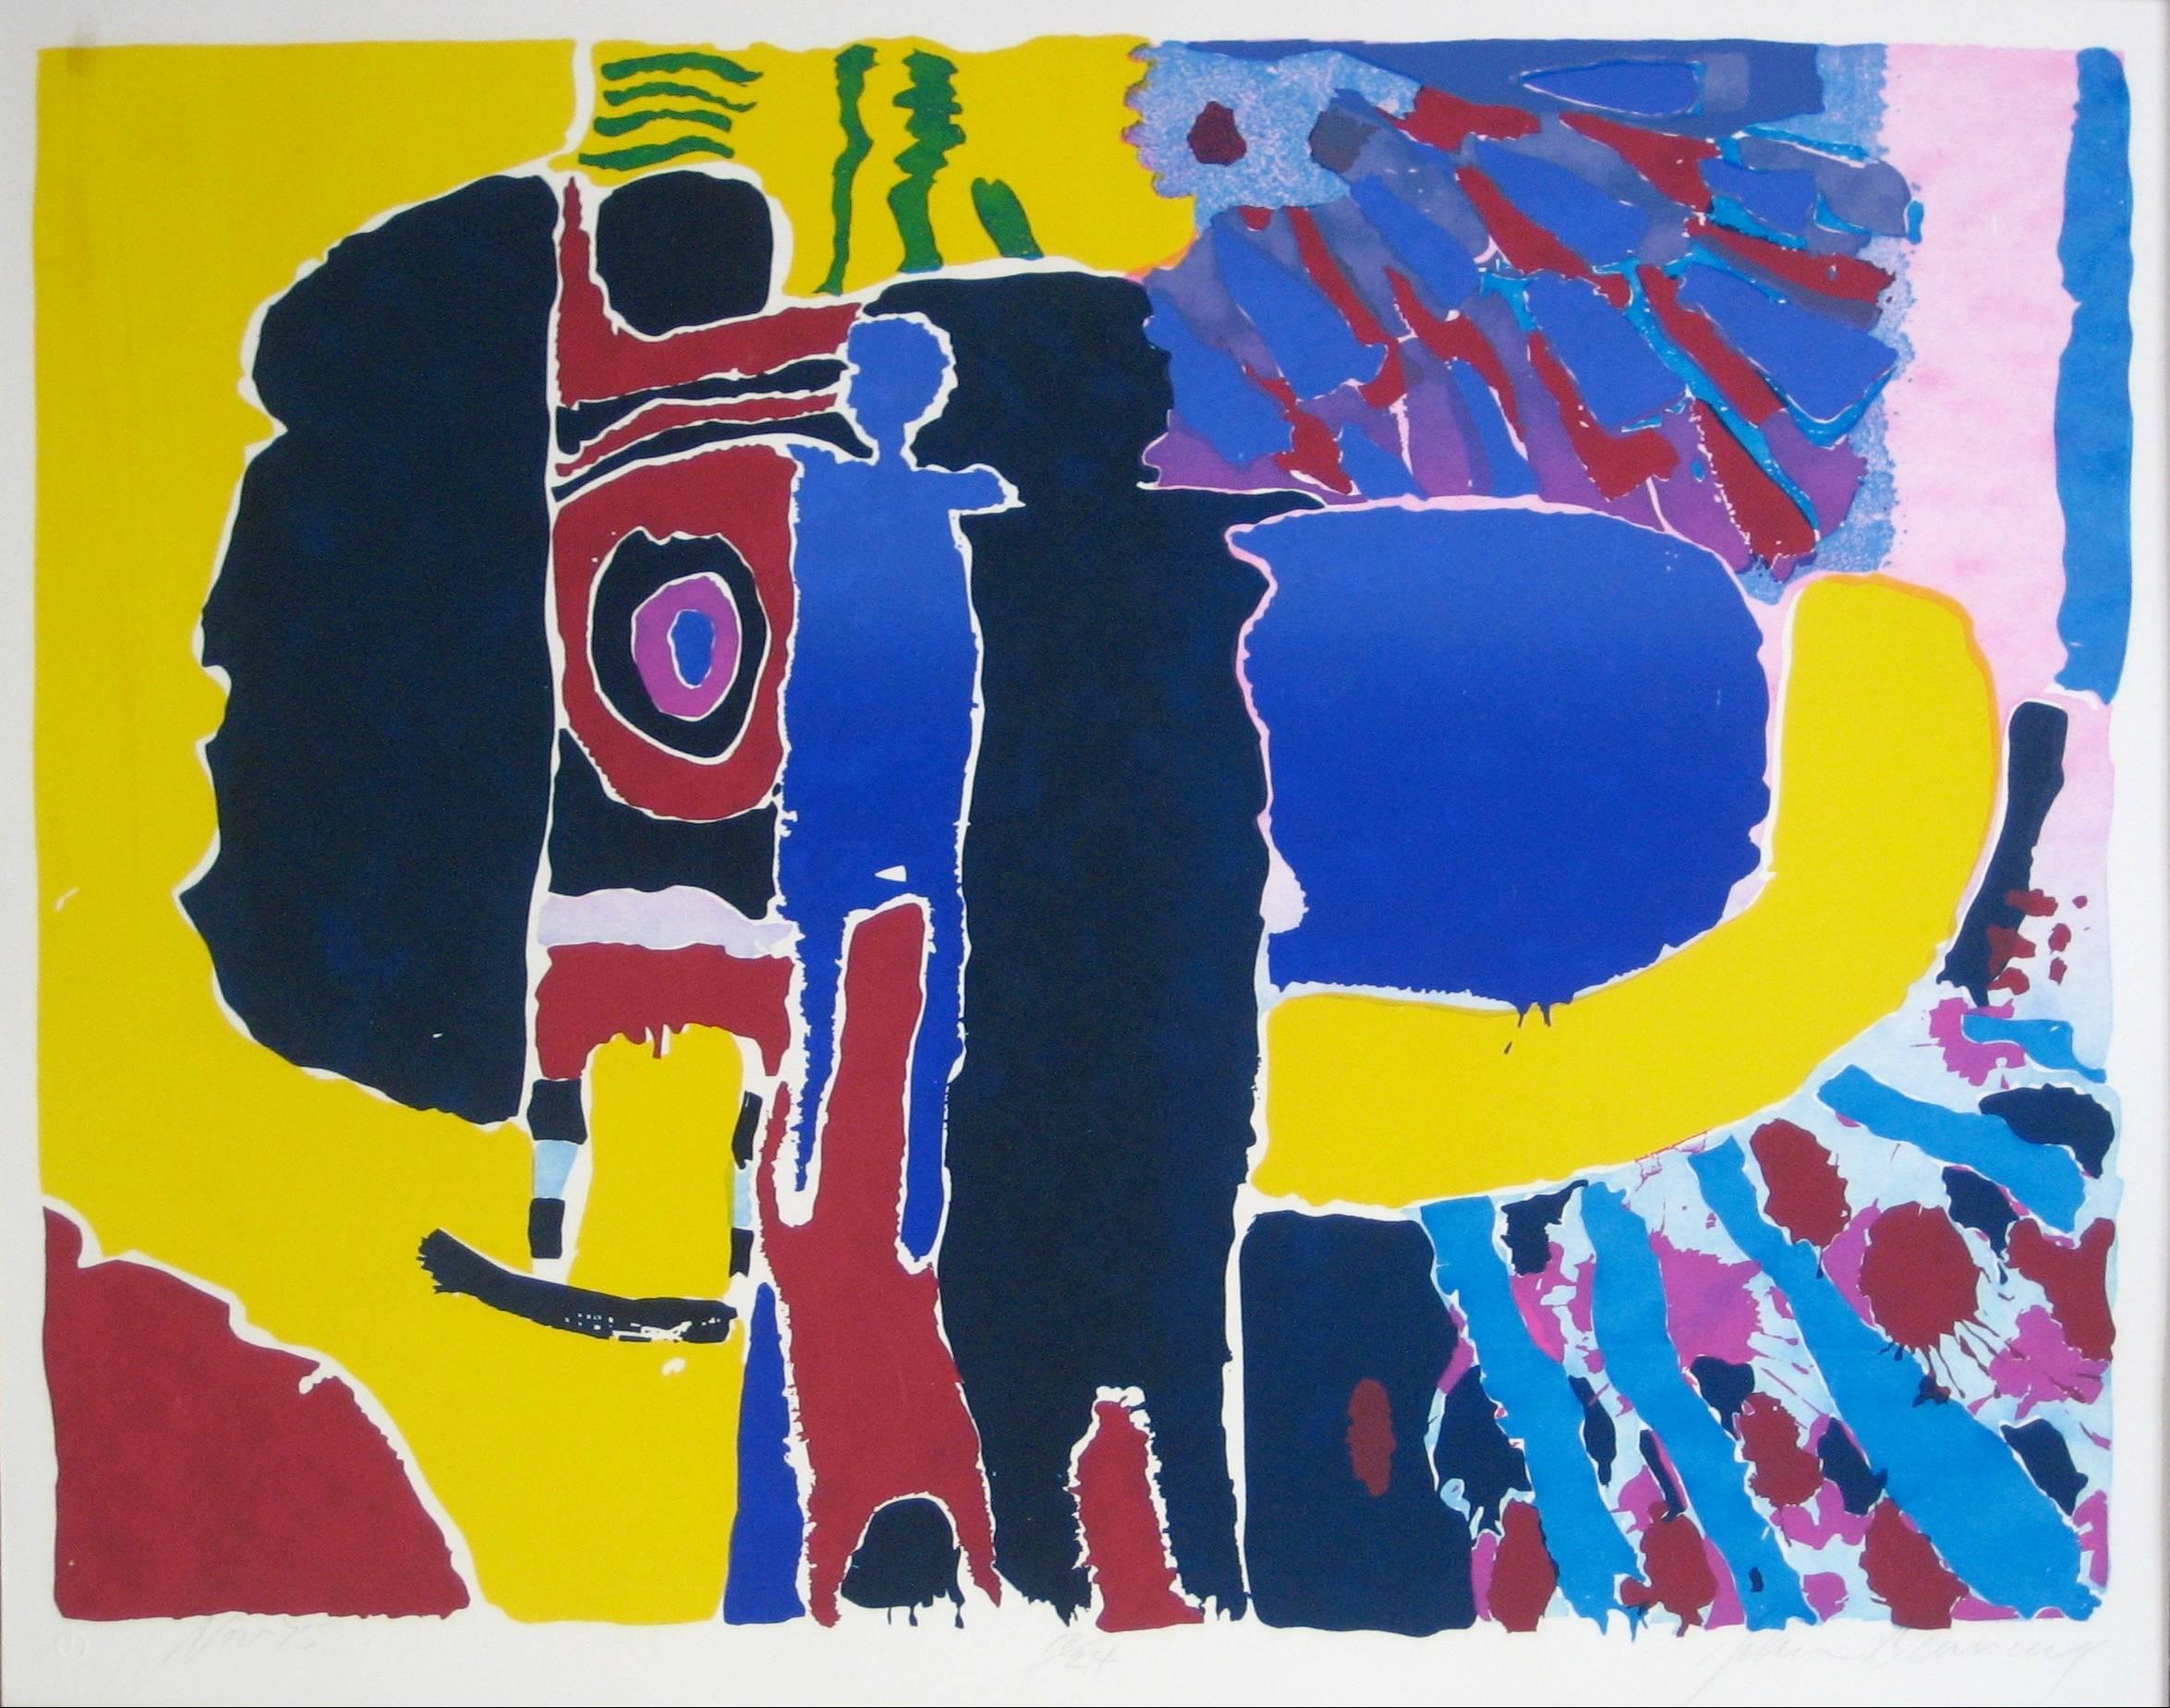 John Denning Abstract Print - "Target Man" Yellow, Blue, and Black, Silkscreen, 1975